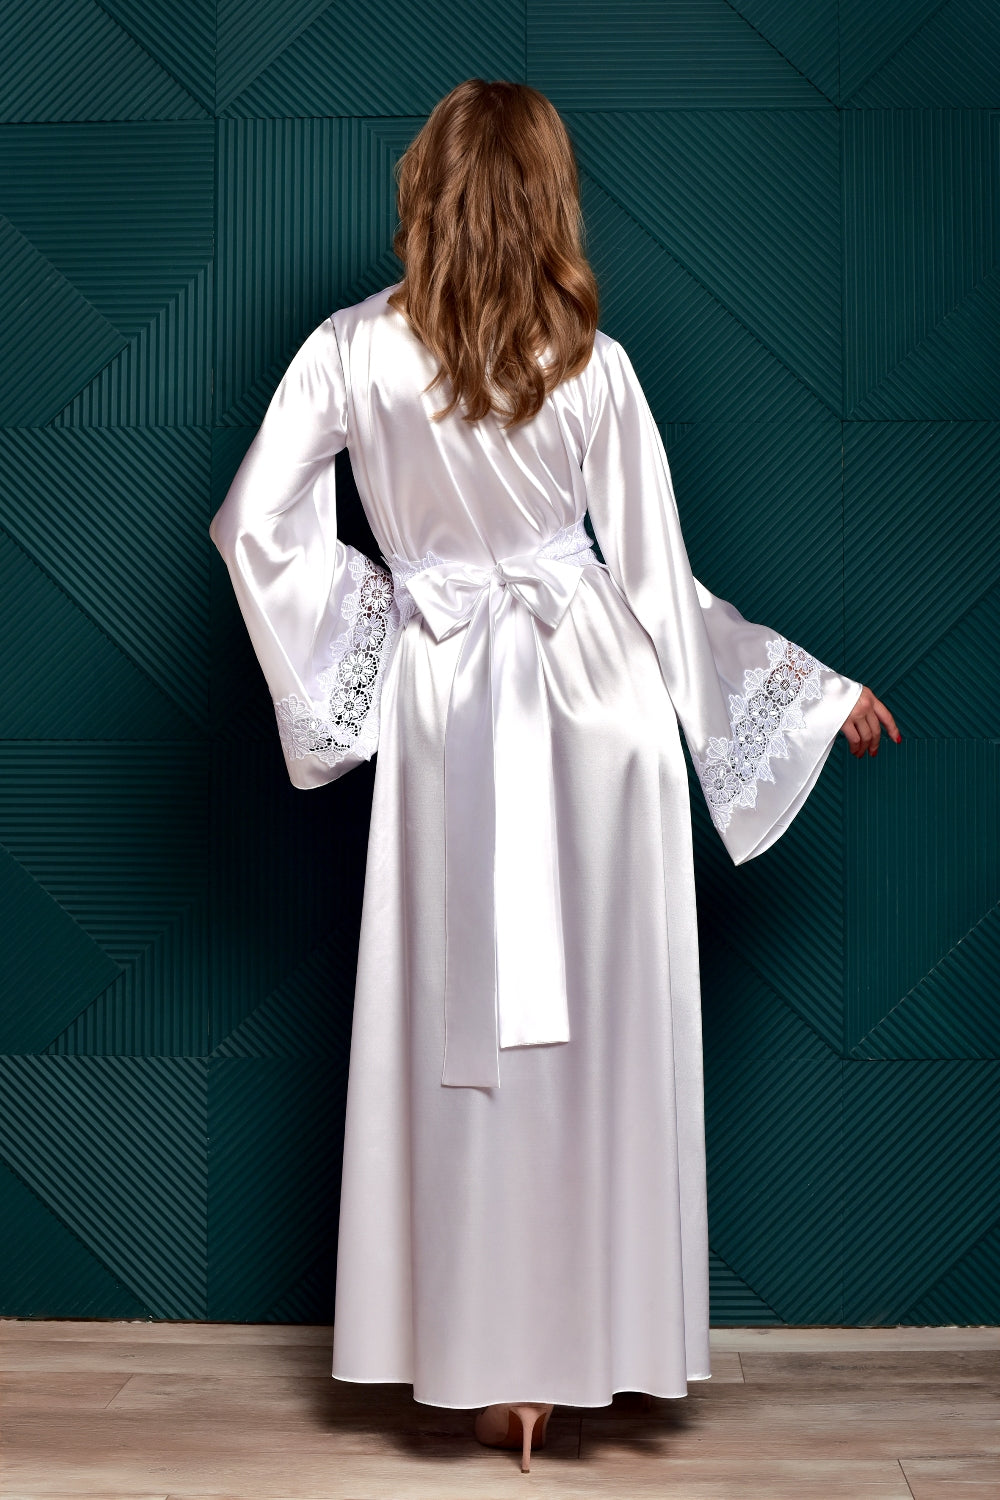 Long Venise-Trim White Satin Robe for Bride